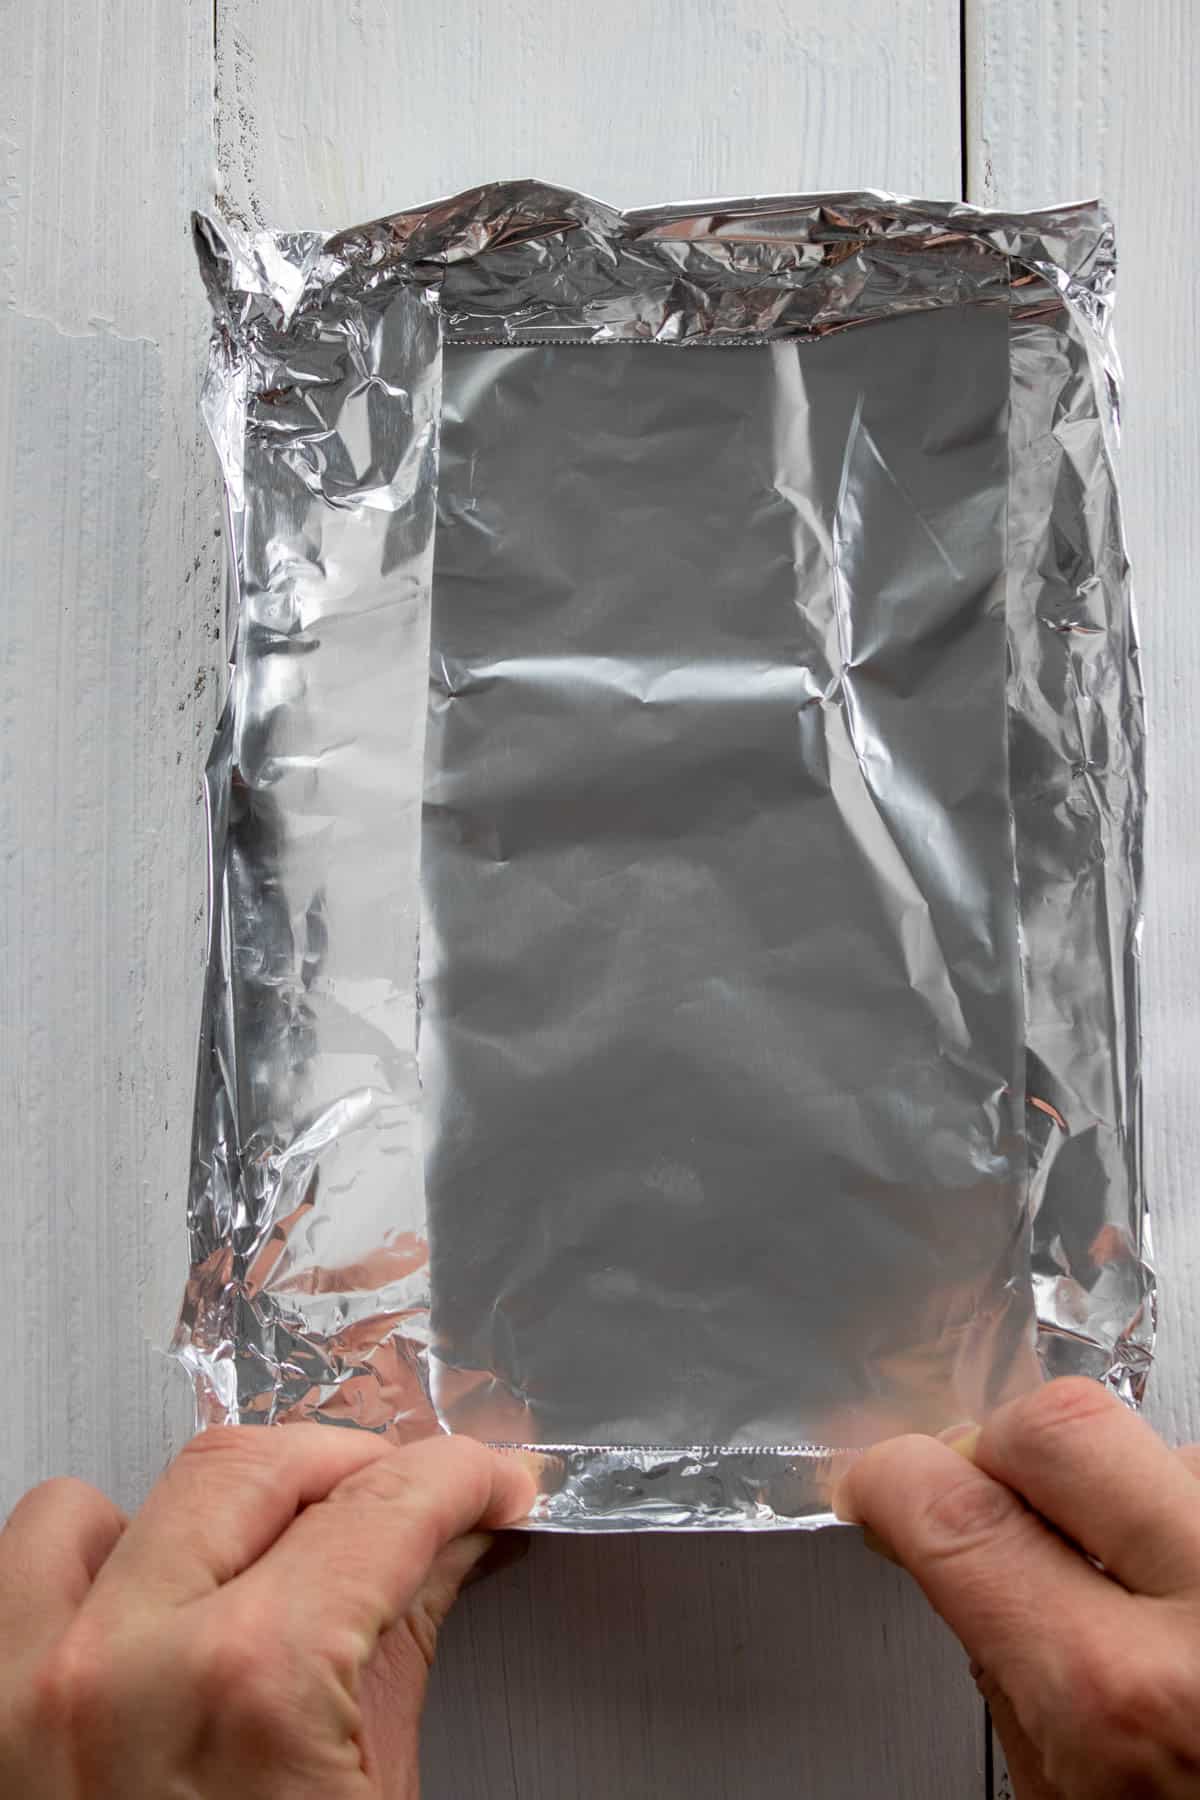 Making an aluminum foil package.